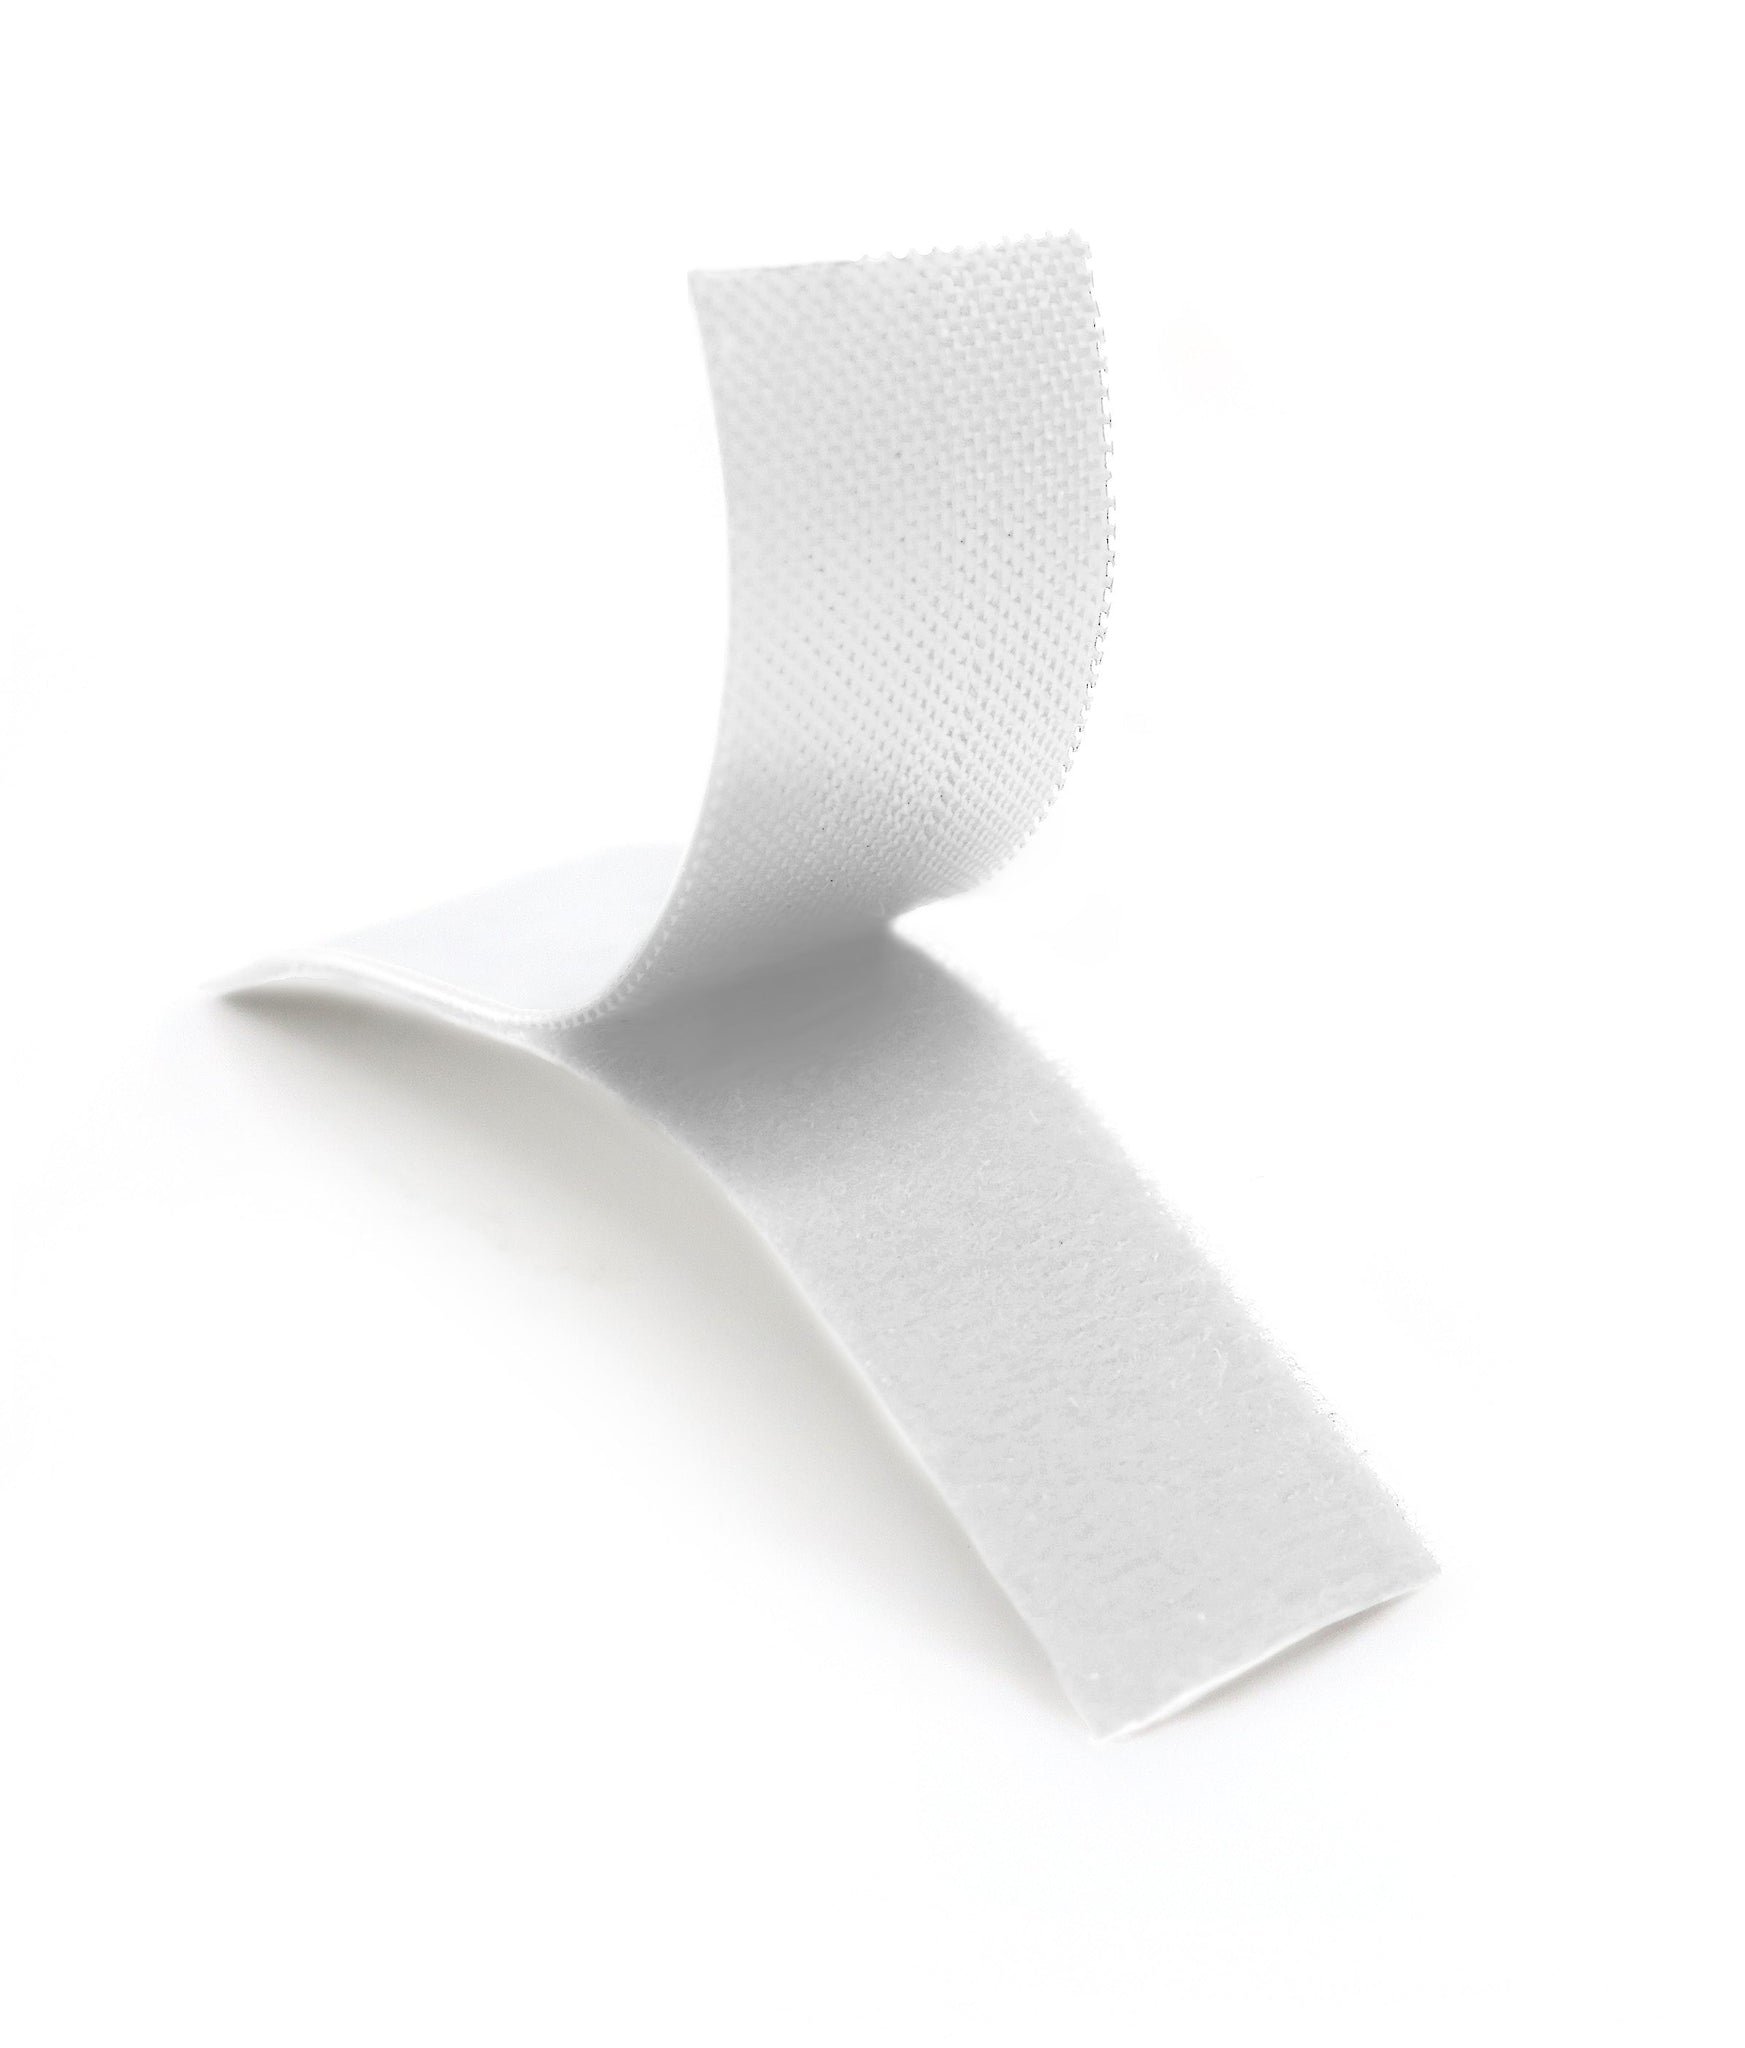 VELCRO Fabric Tape 19mm x 60 cm White